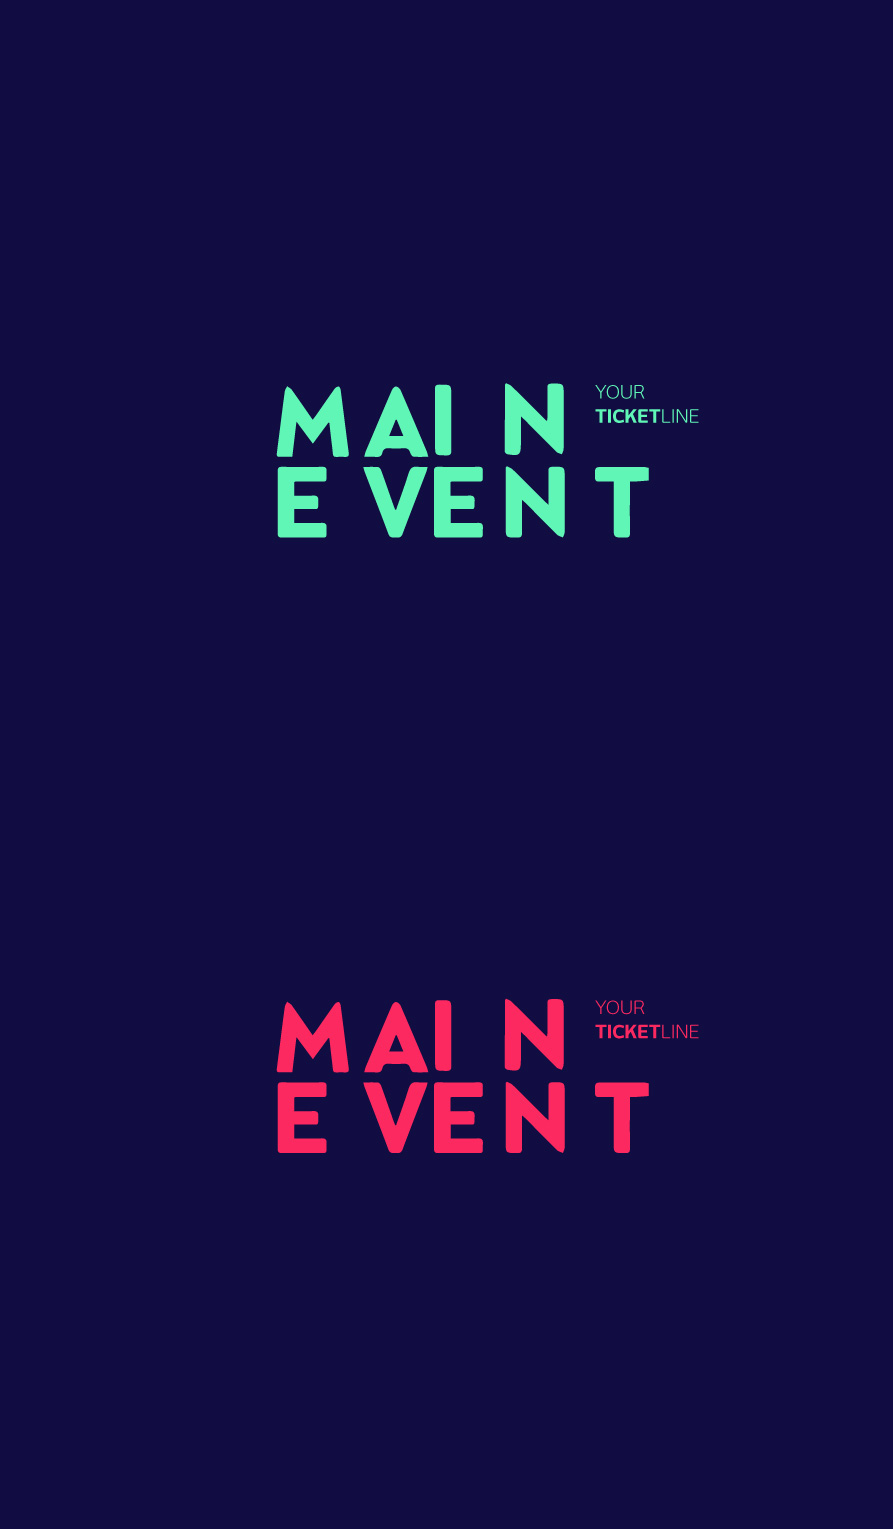 Event tickets site app colors bands concerts Web